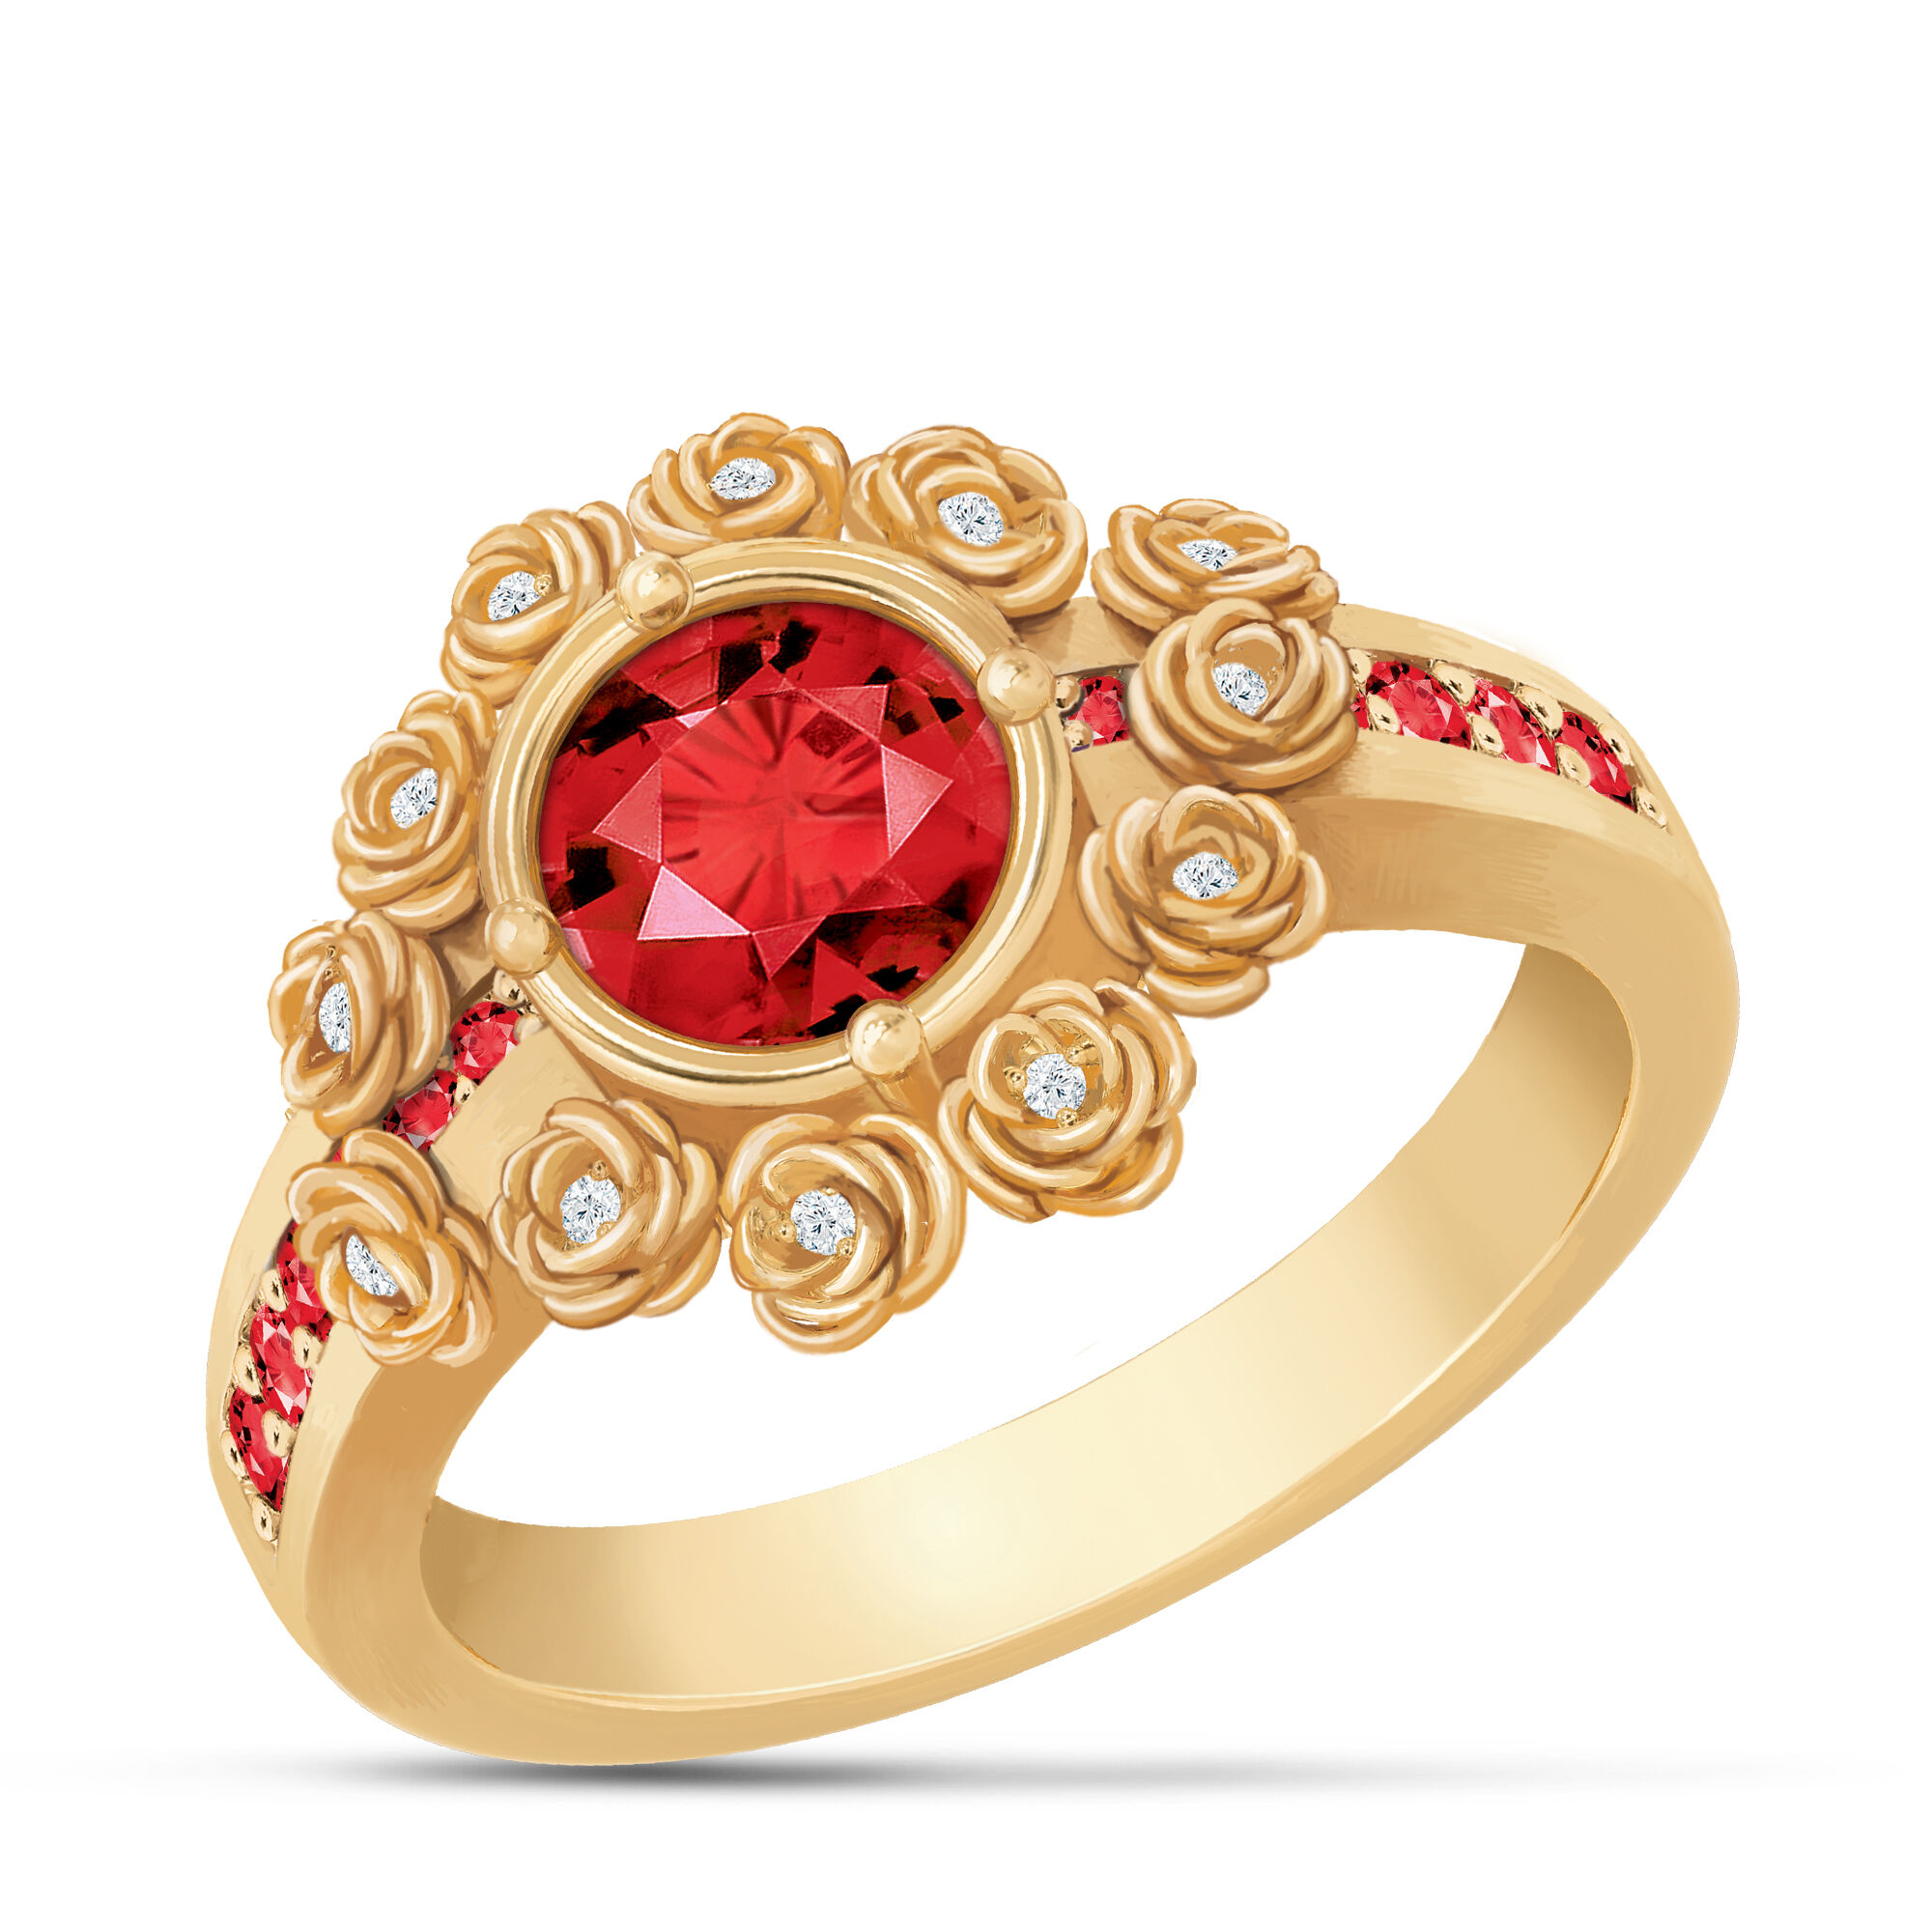 A Dozen Roses Birthstone Diamond Ring 6874 0018 g july